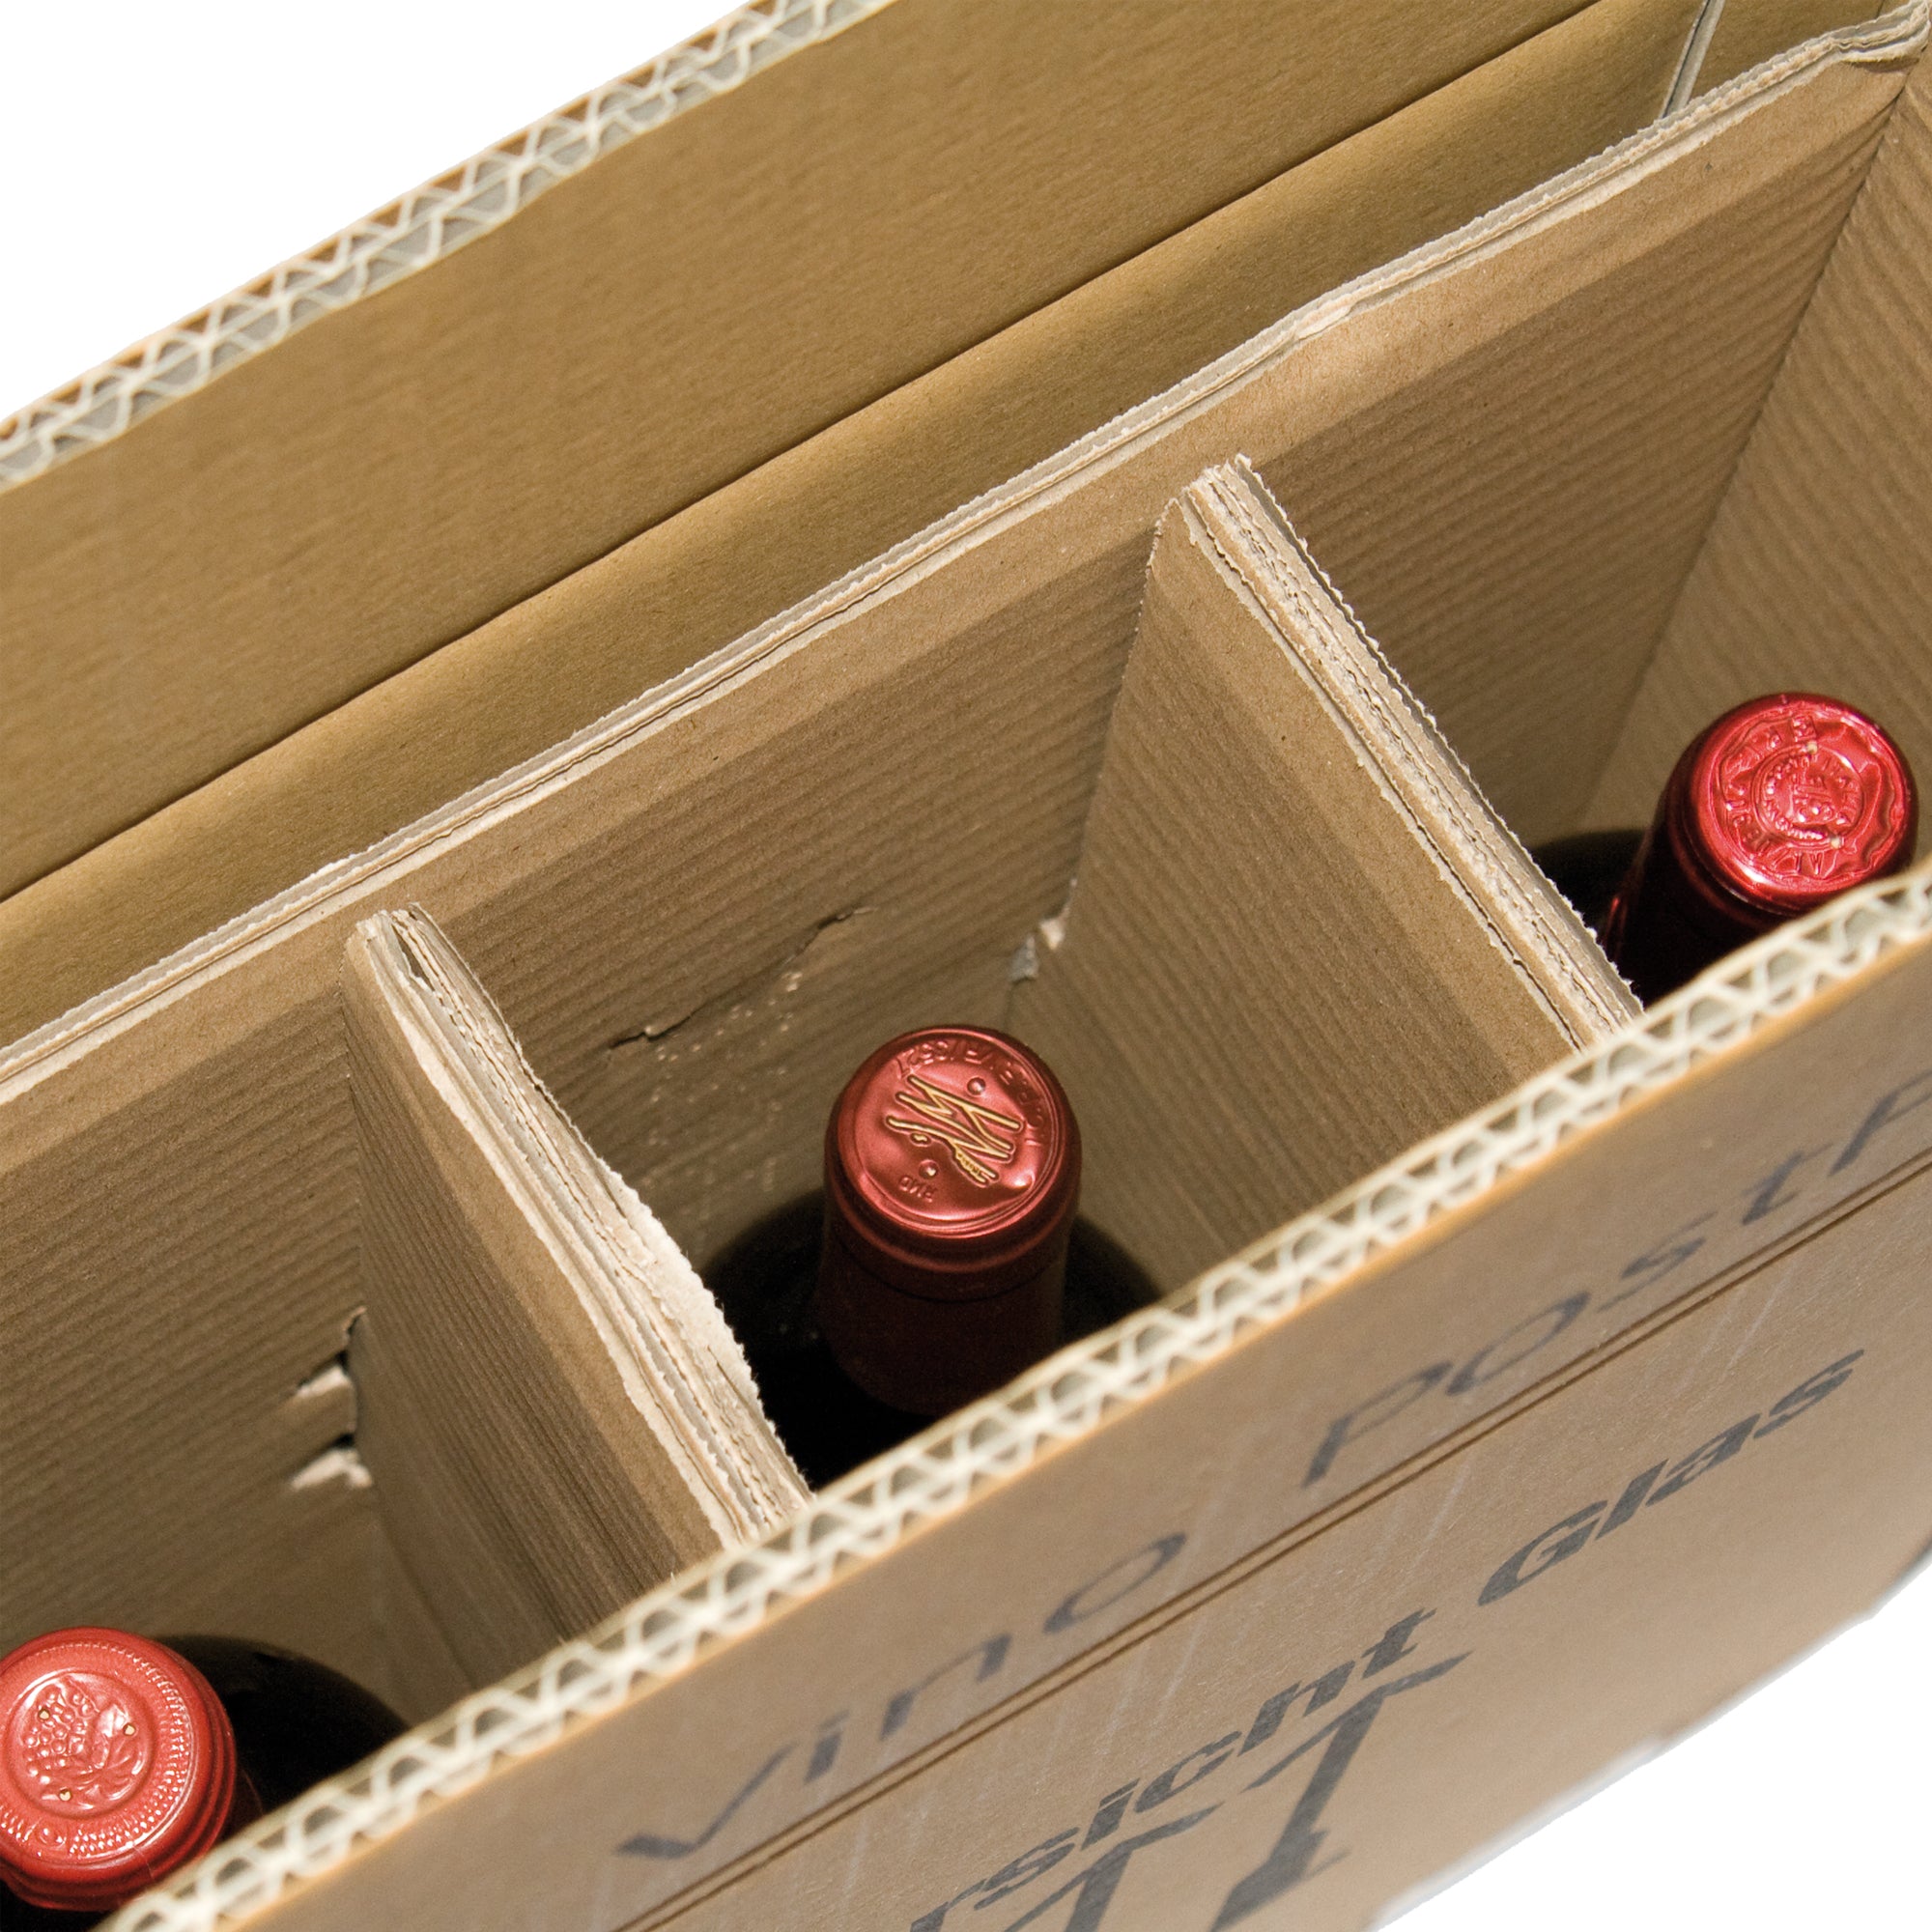 bong-packaging-10-scatole-quattro-bottiglie-wine-pack-21-2x20-4x36-8-cm